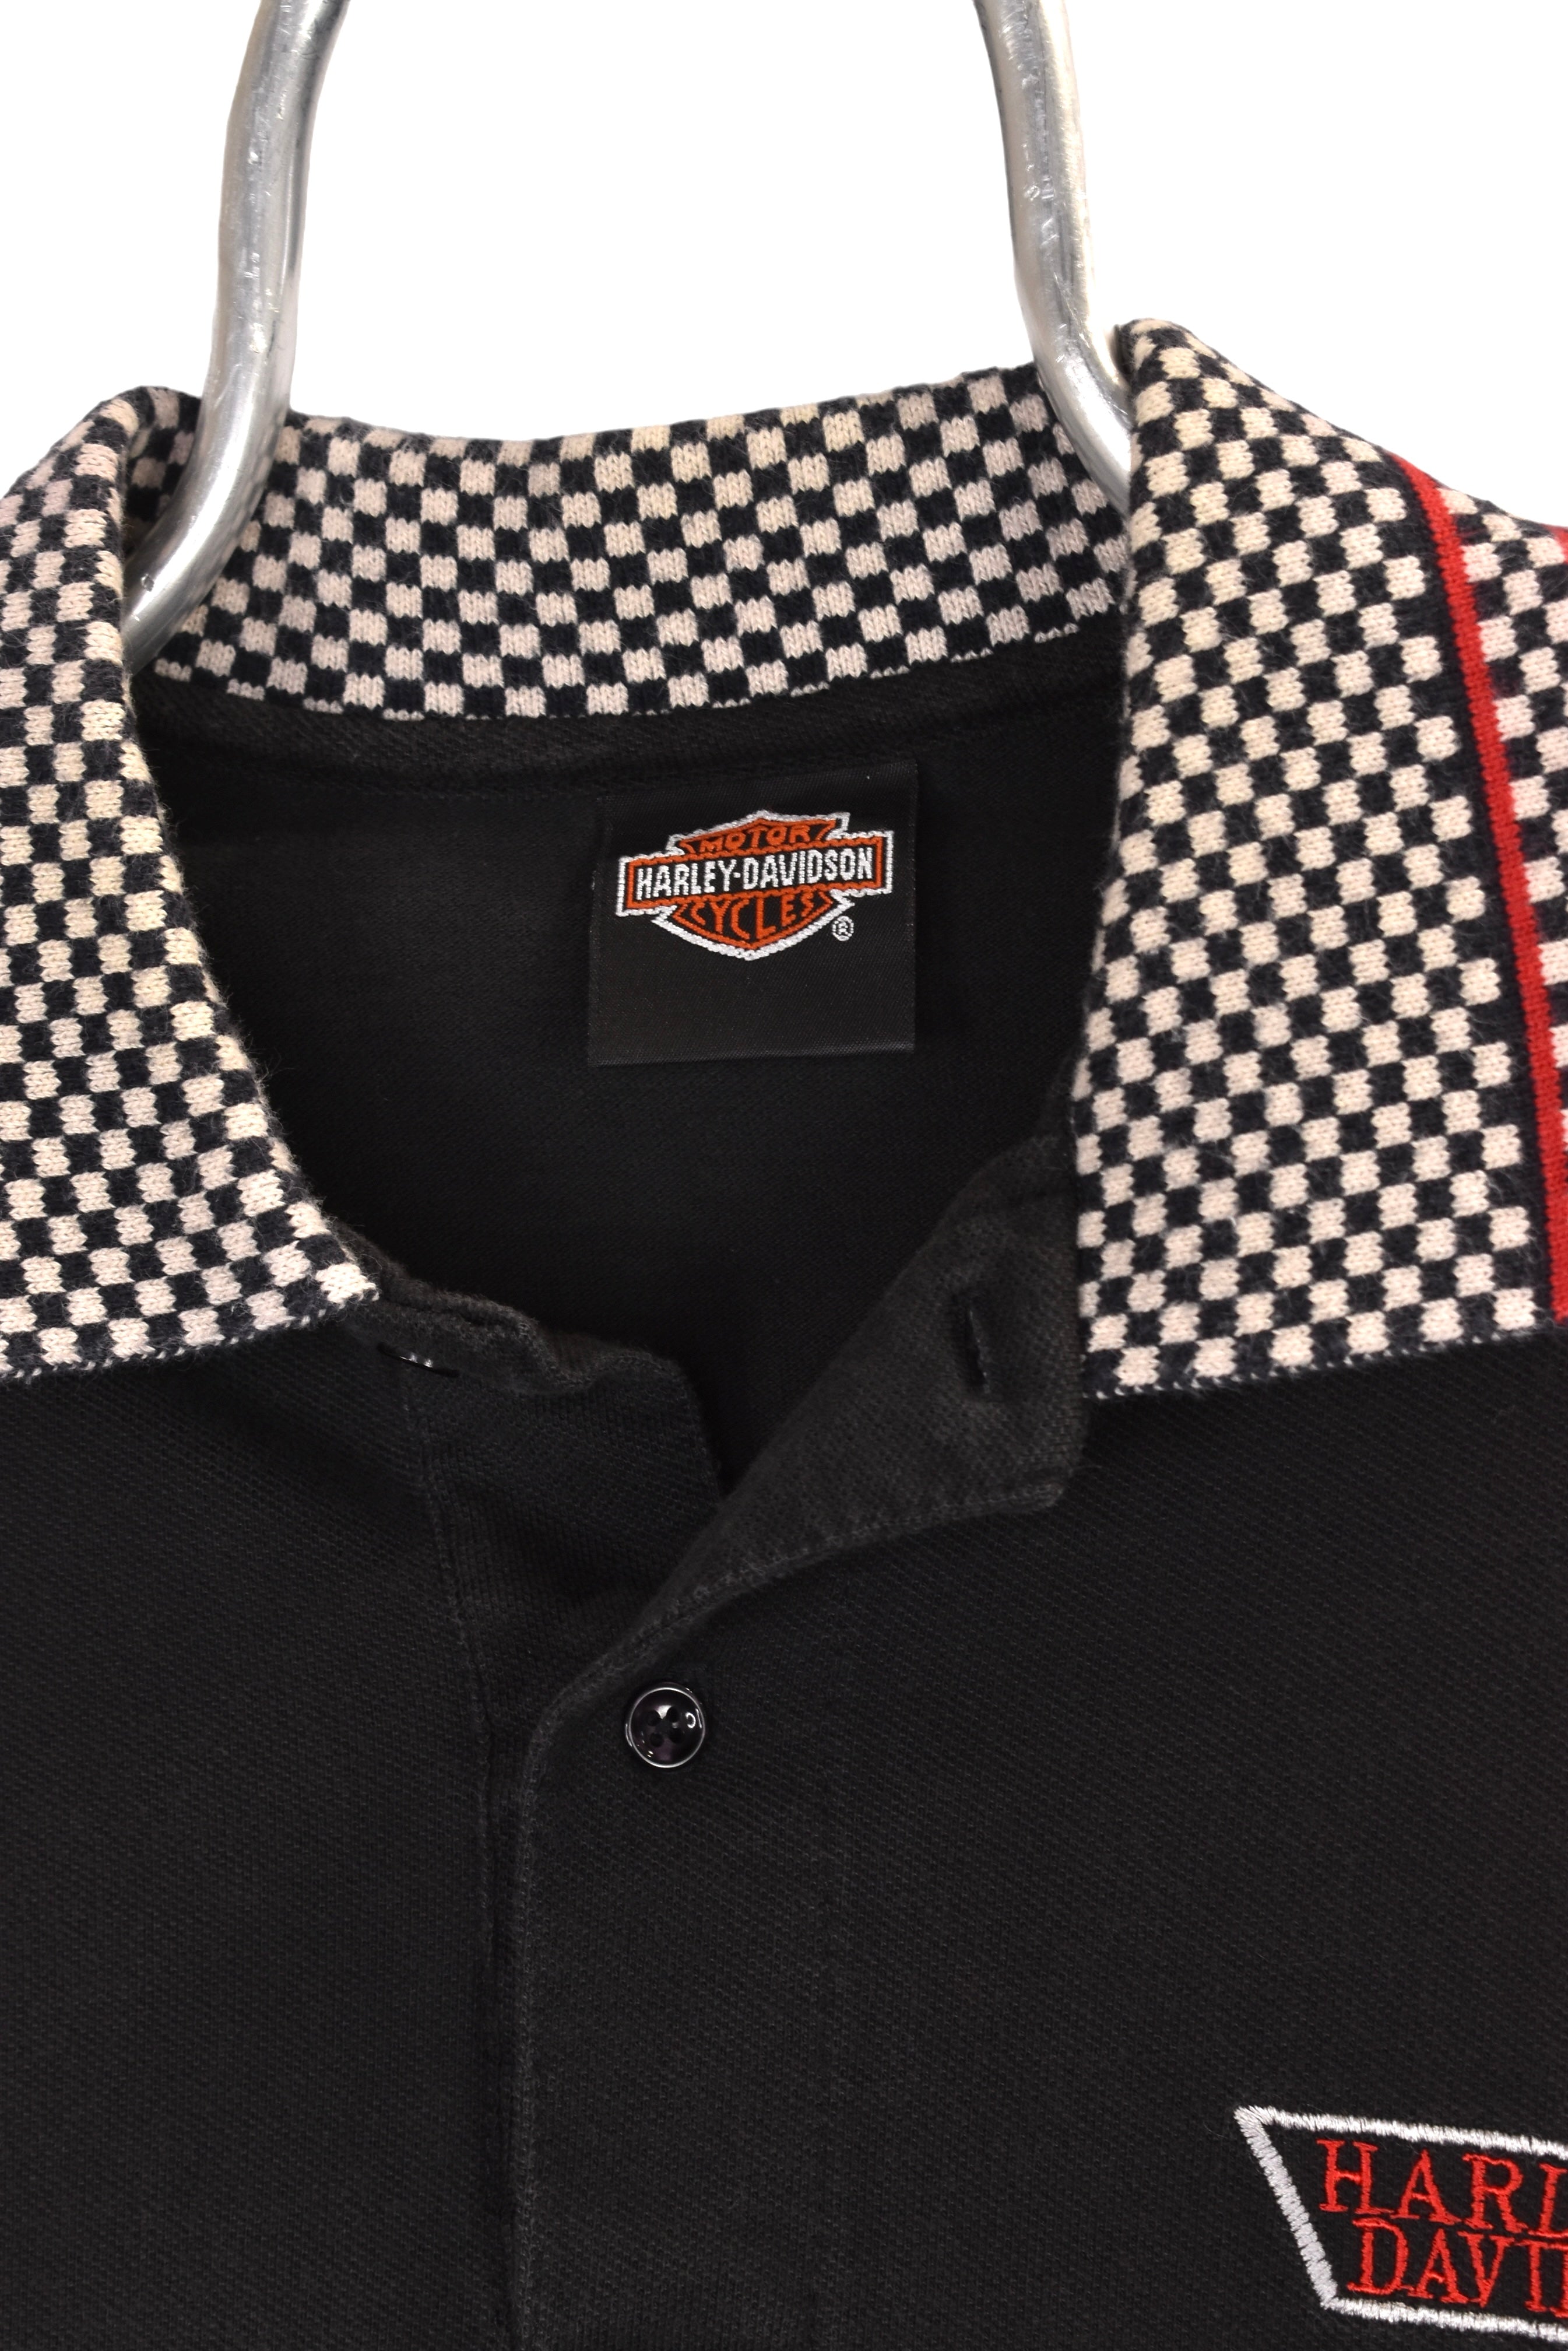 Vintage Harley Davidson polo shirt (M), black embroidered top